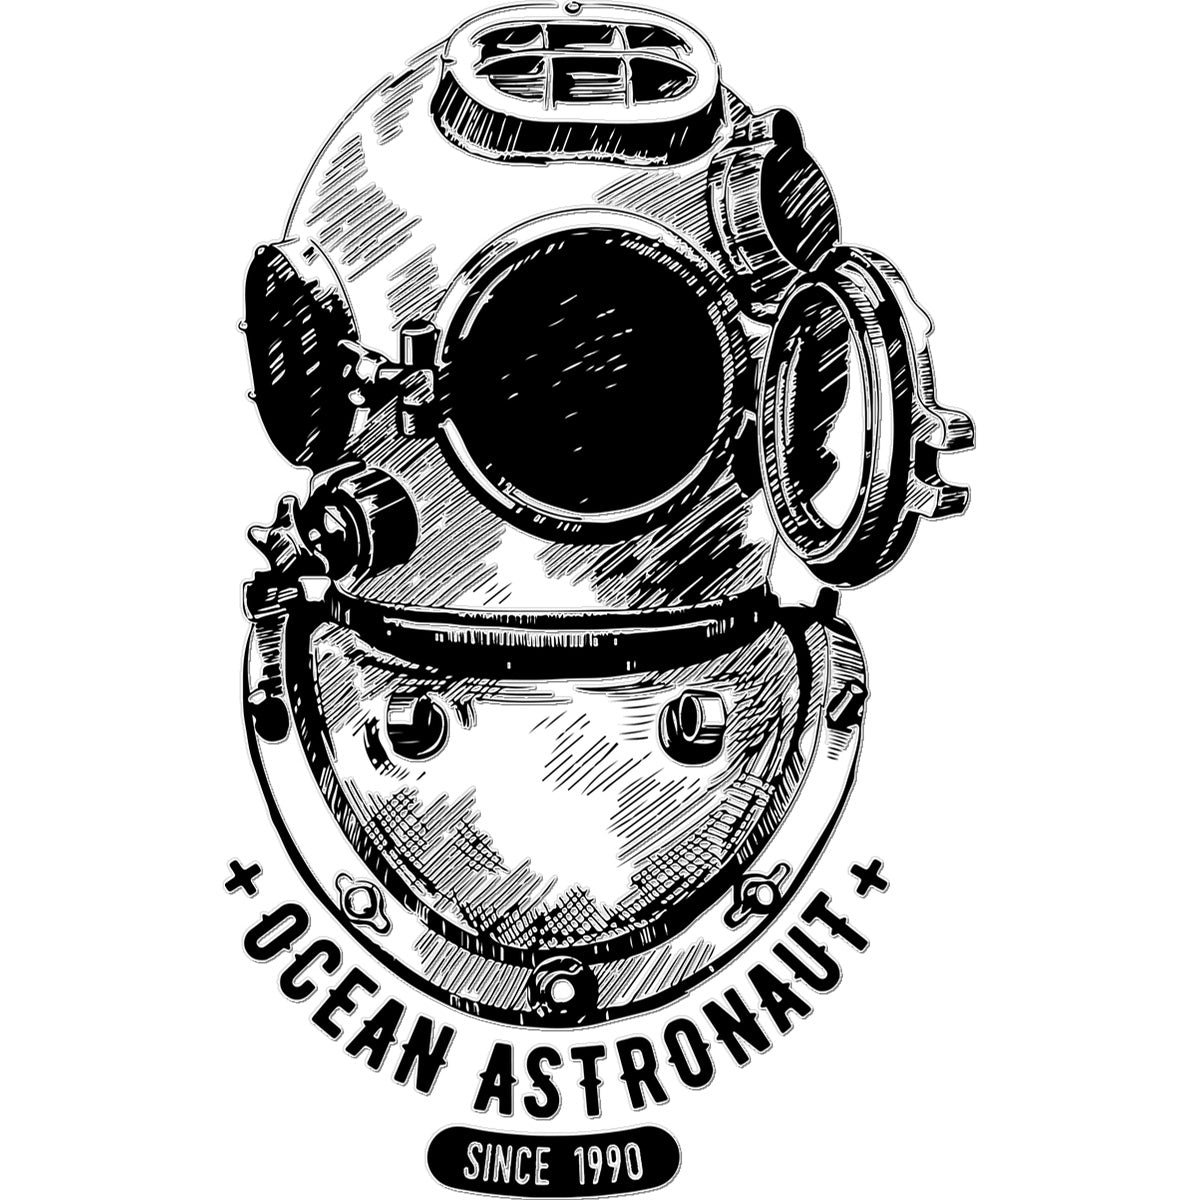 AQUA B&W - 05 - Ocean astronaut - Temporary Tattoo